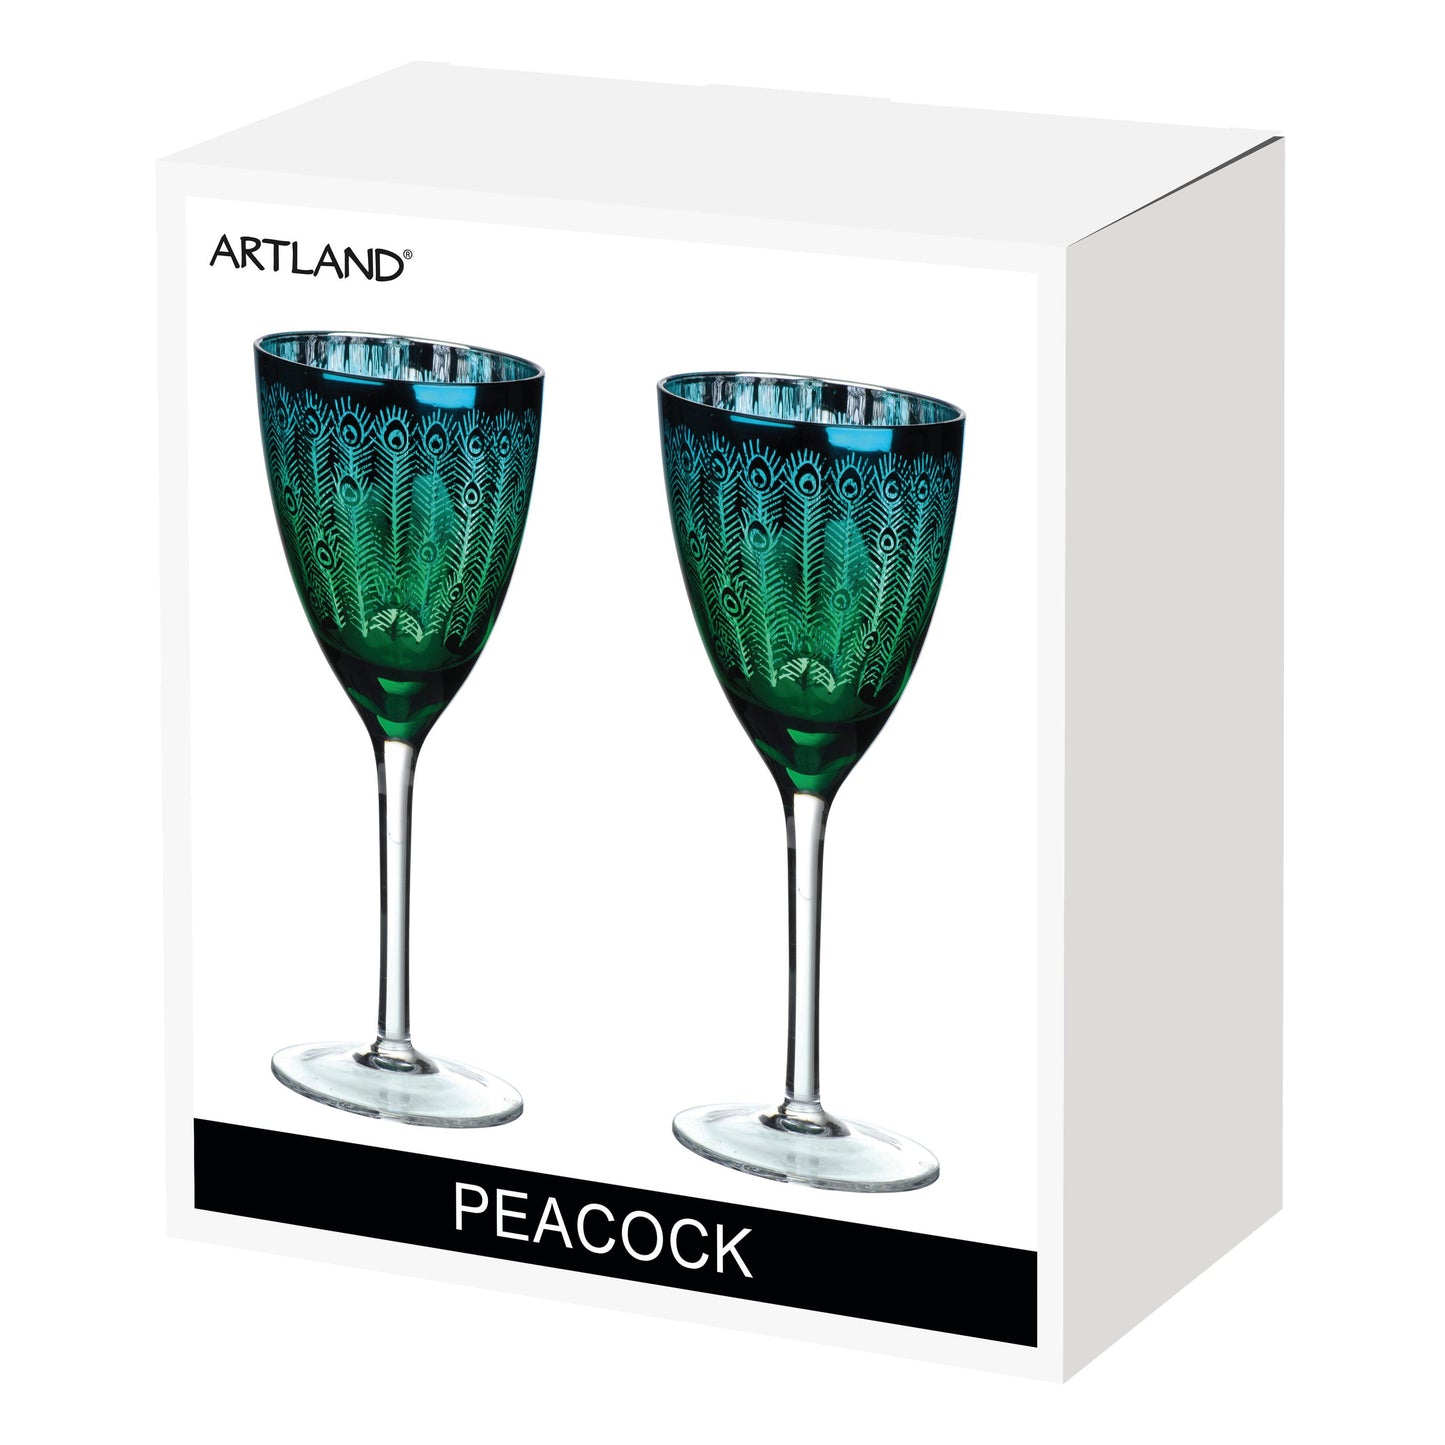 Artland Glass Peacock Wine Glass - Set of 2 Glasses